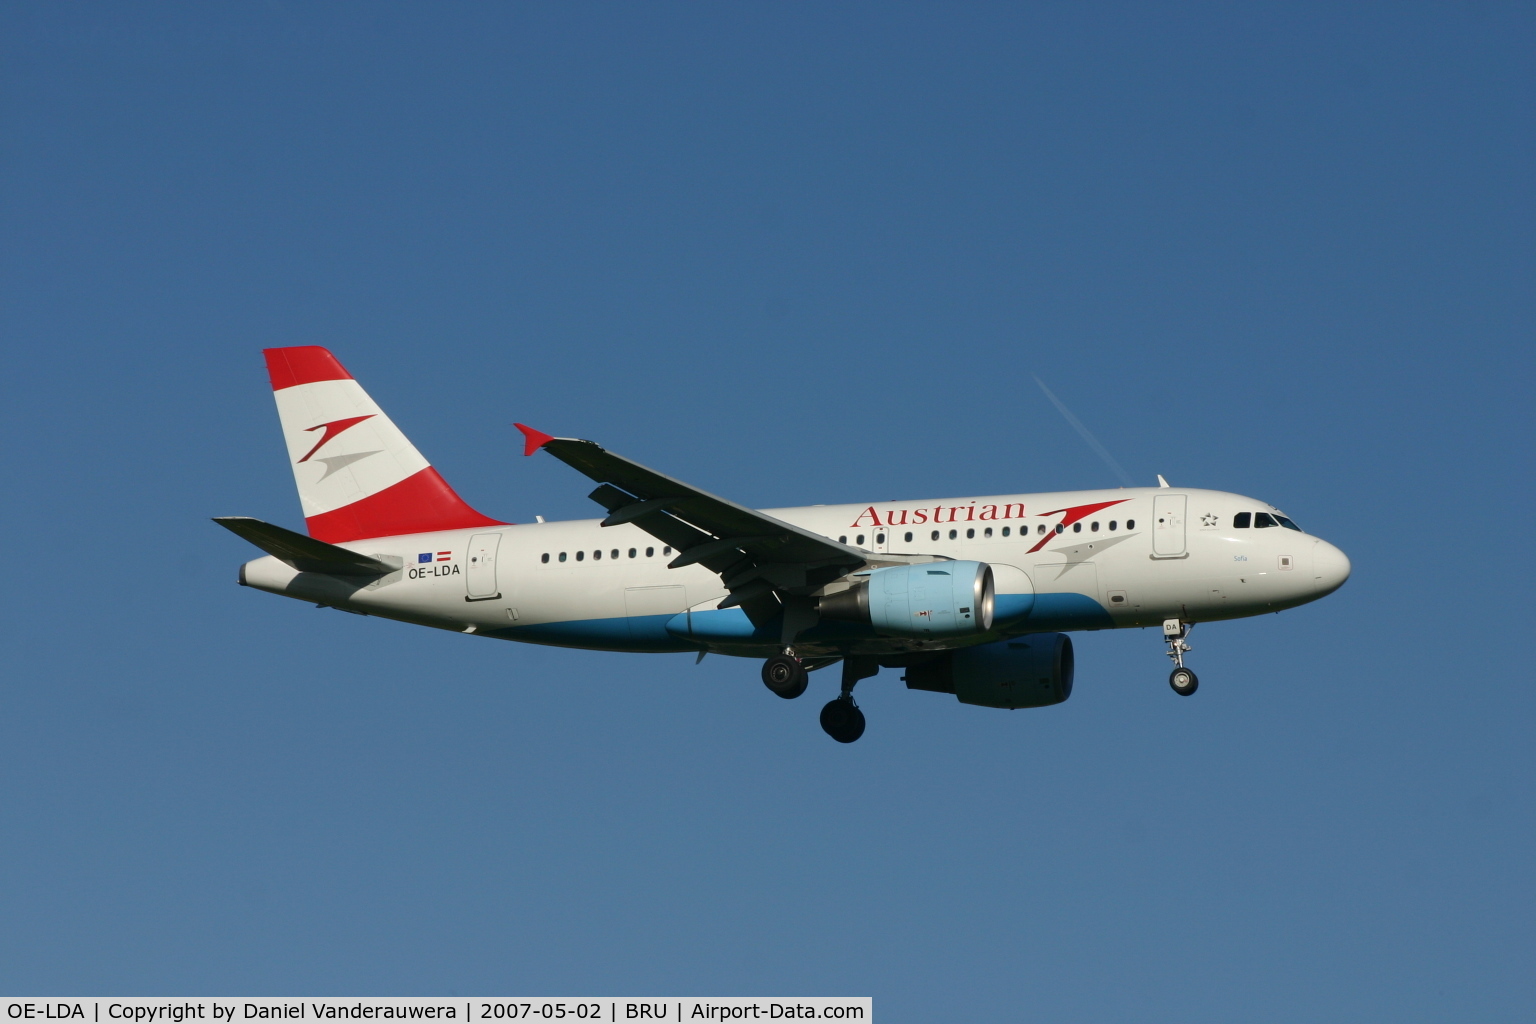 OE-LDA, 2004 Airbus A319-112 C/N 2131, flight OS351 is descending to rwy 02